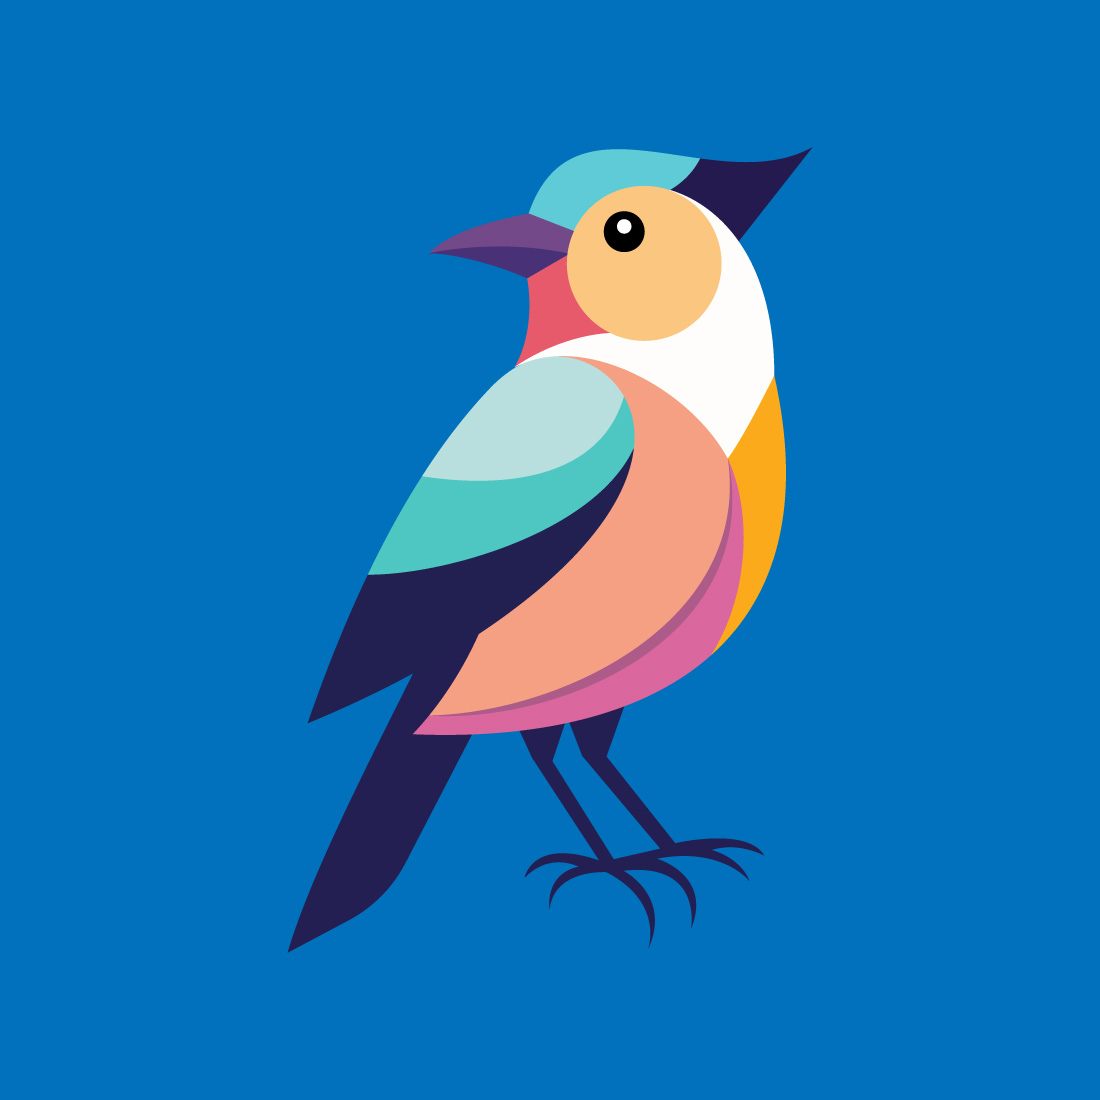 Beautiful multi colored bird Bird logo design vector illustration cover image.